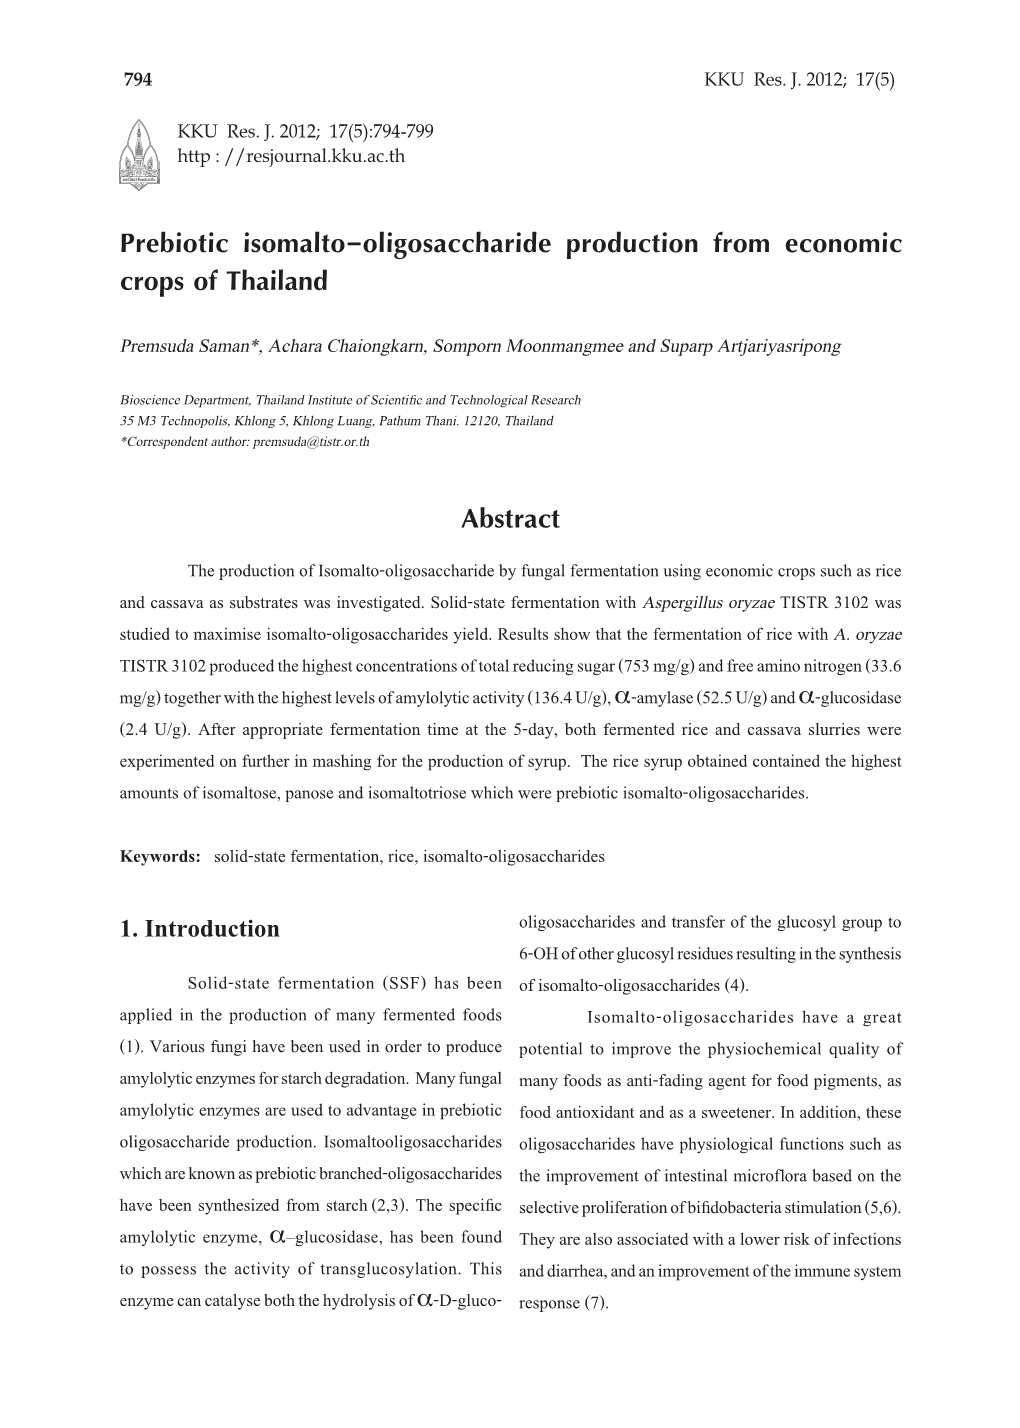 Prebiotic Isomalto-Oligosaccharide Production from Economic Crops of Thailand